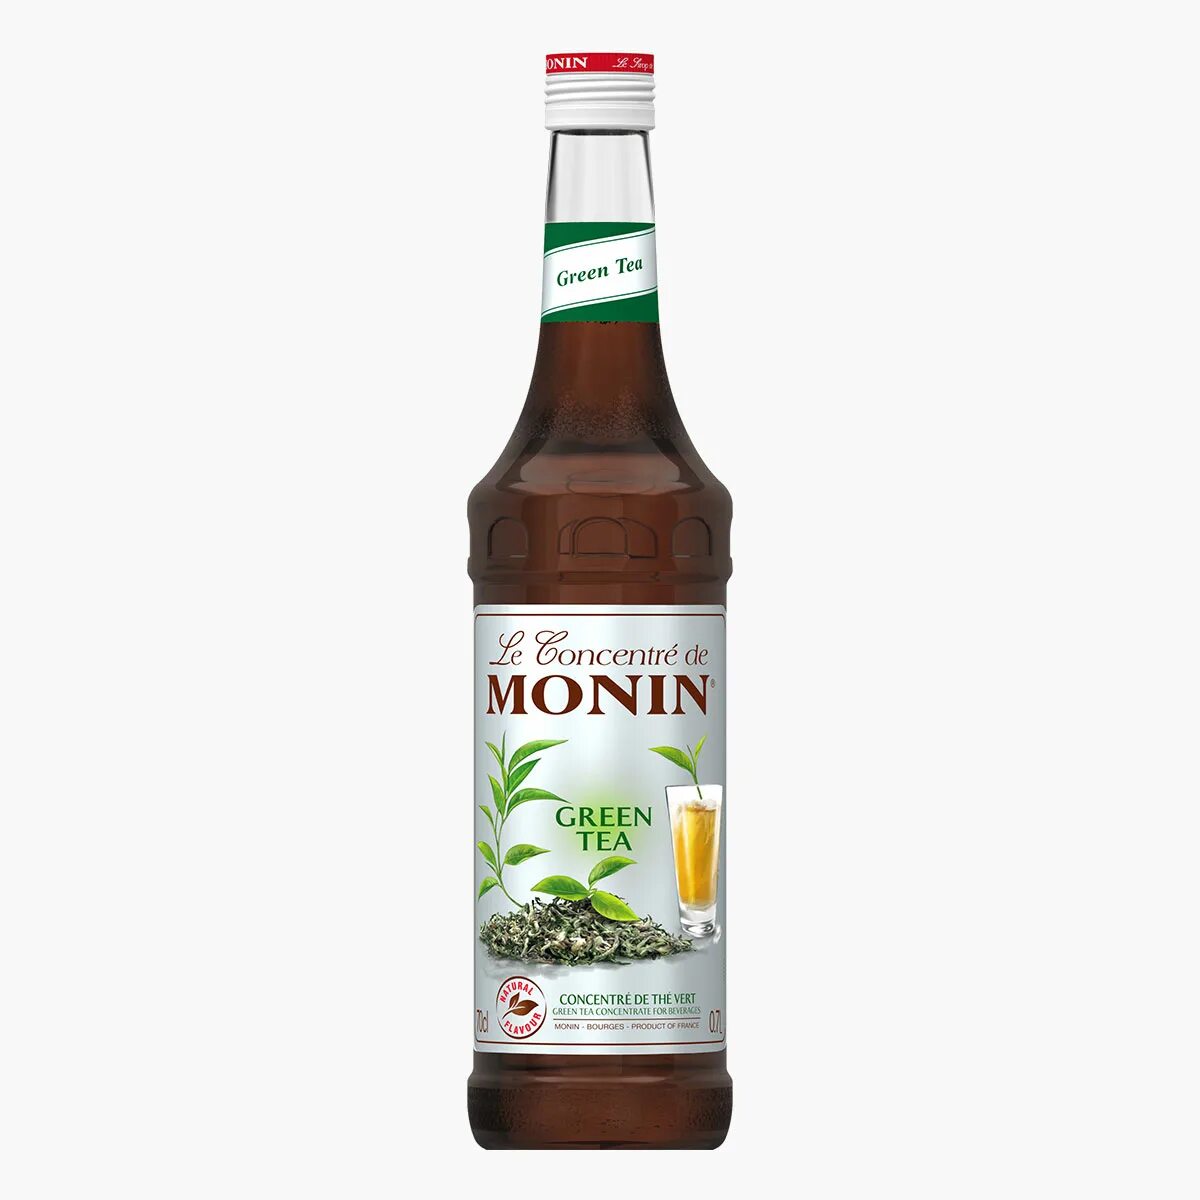 Monin Winter Spice. Сироп Monin, Chai Tea, 0.7 л. Матча Грин Теа сироп Монин. Сироп Monin зеленый чай с пряностями.